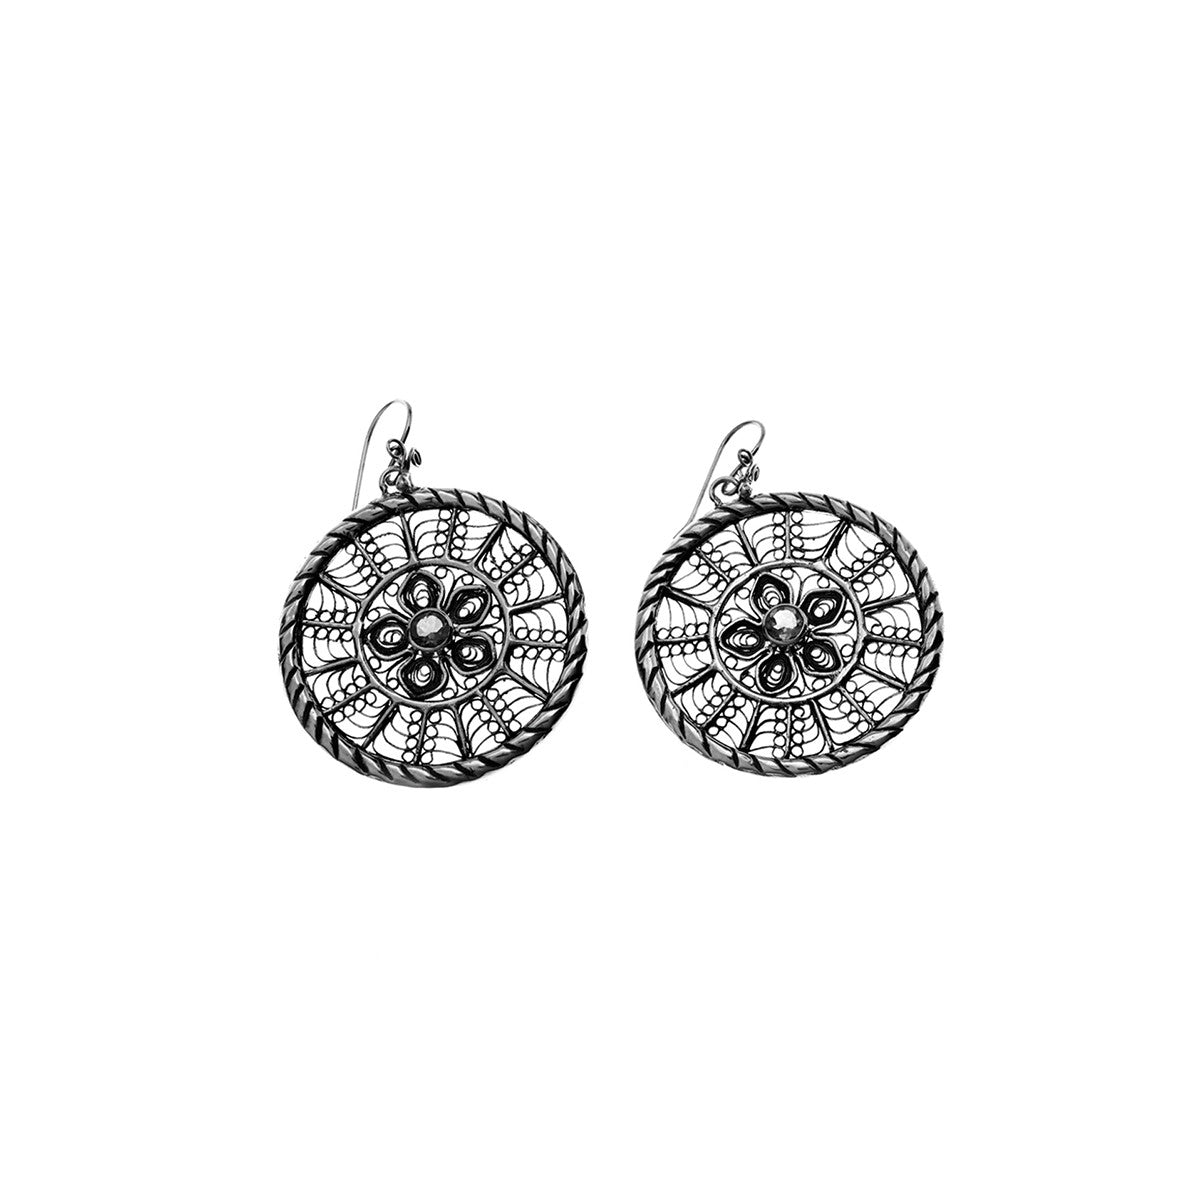 Ca D'zan Sunset Sterling Silver Statement Earring - Cynthia Gale New York Jewelry